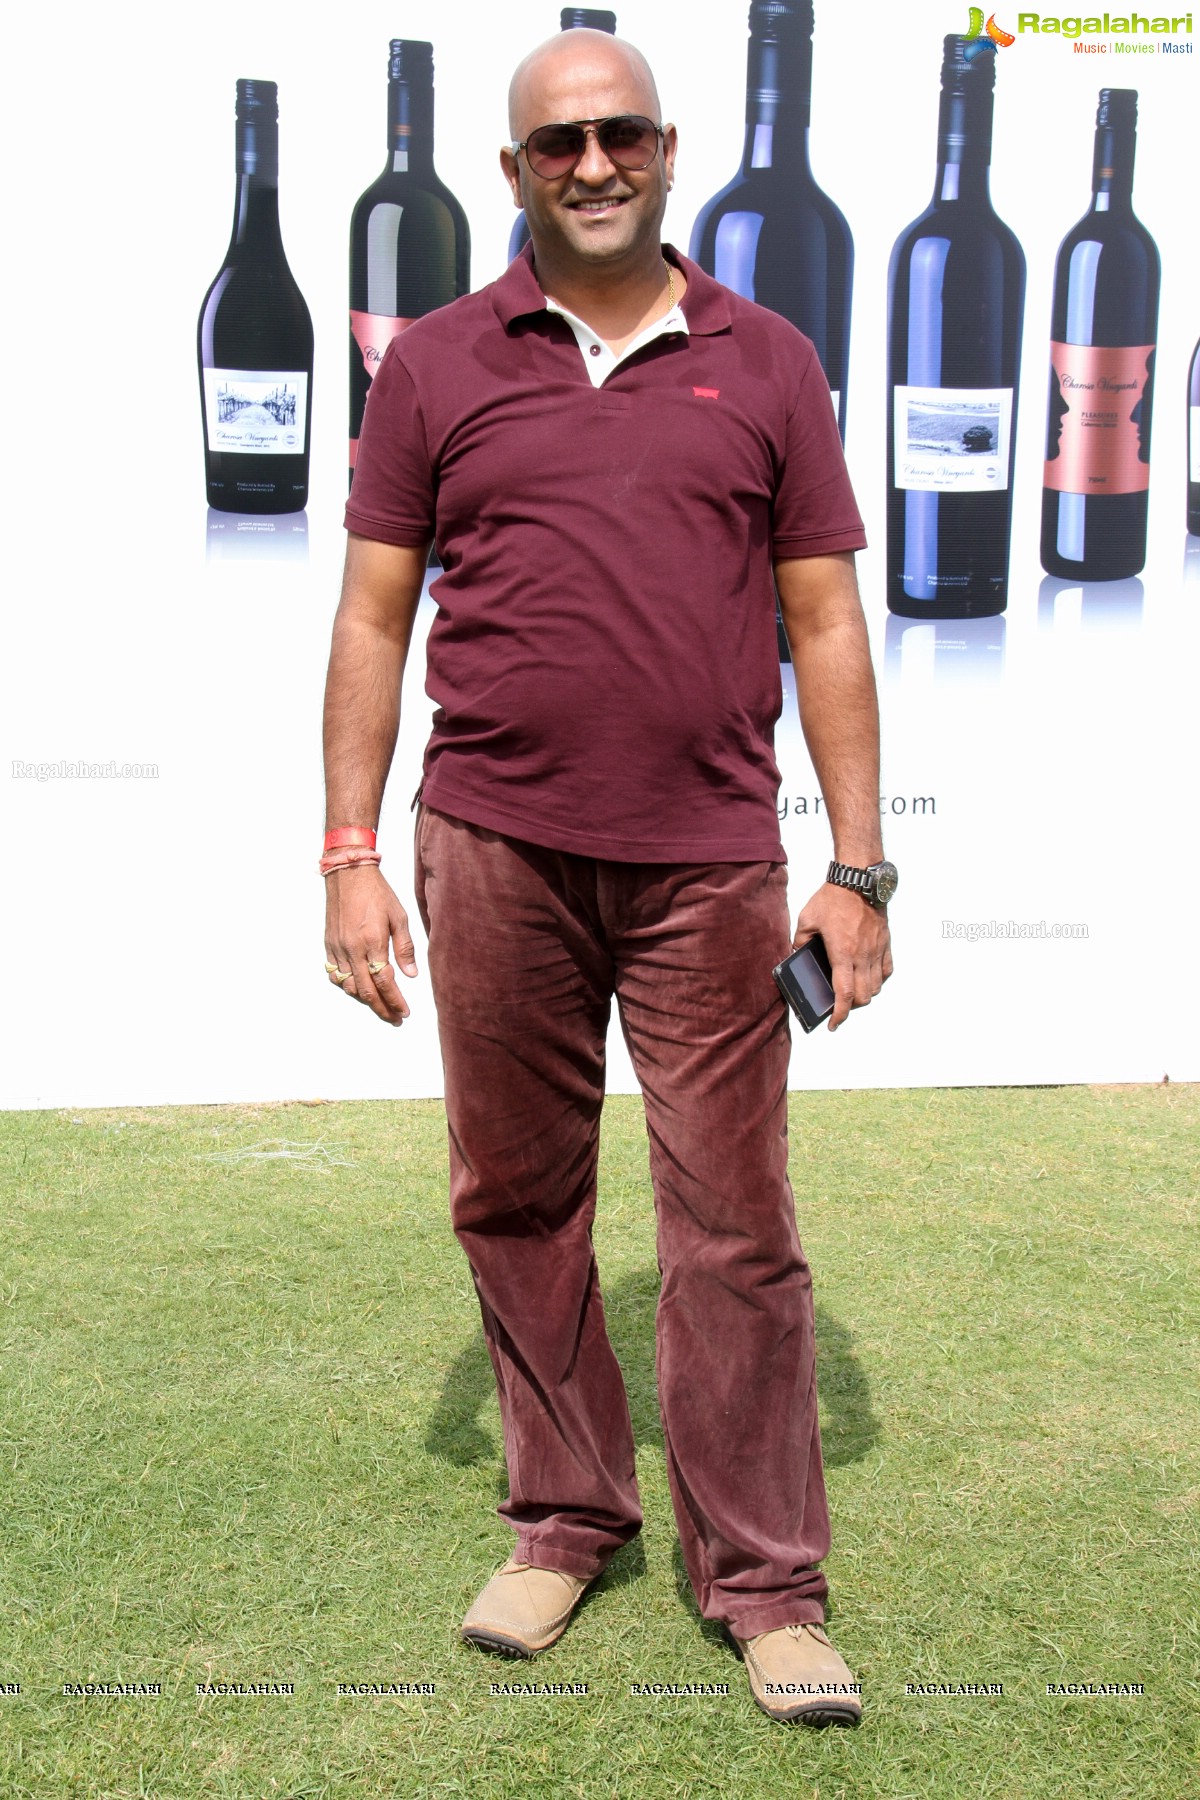 Grape Stomping by Charosa Vineyards at Hyderabad Golf Club